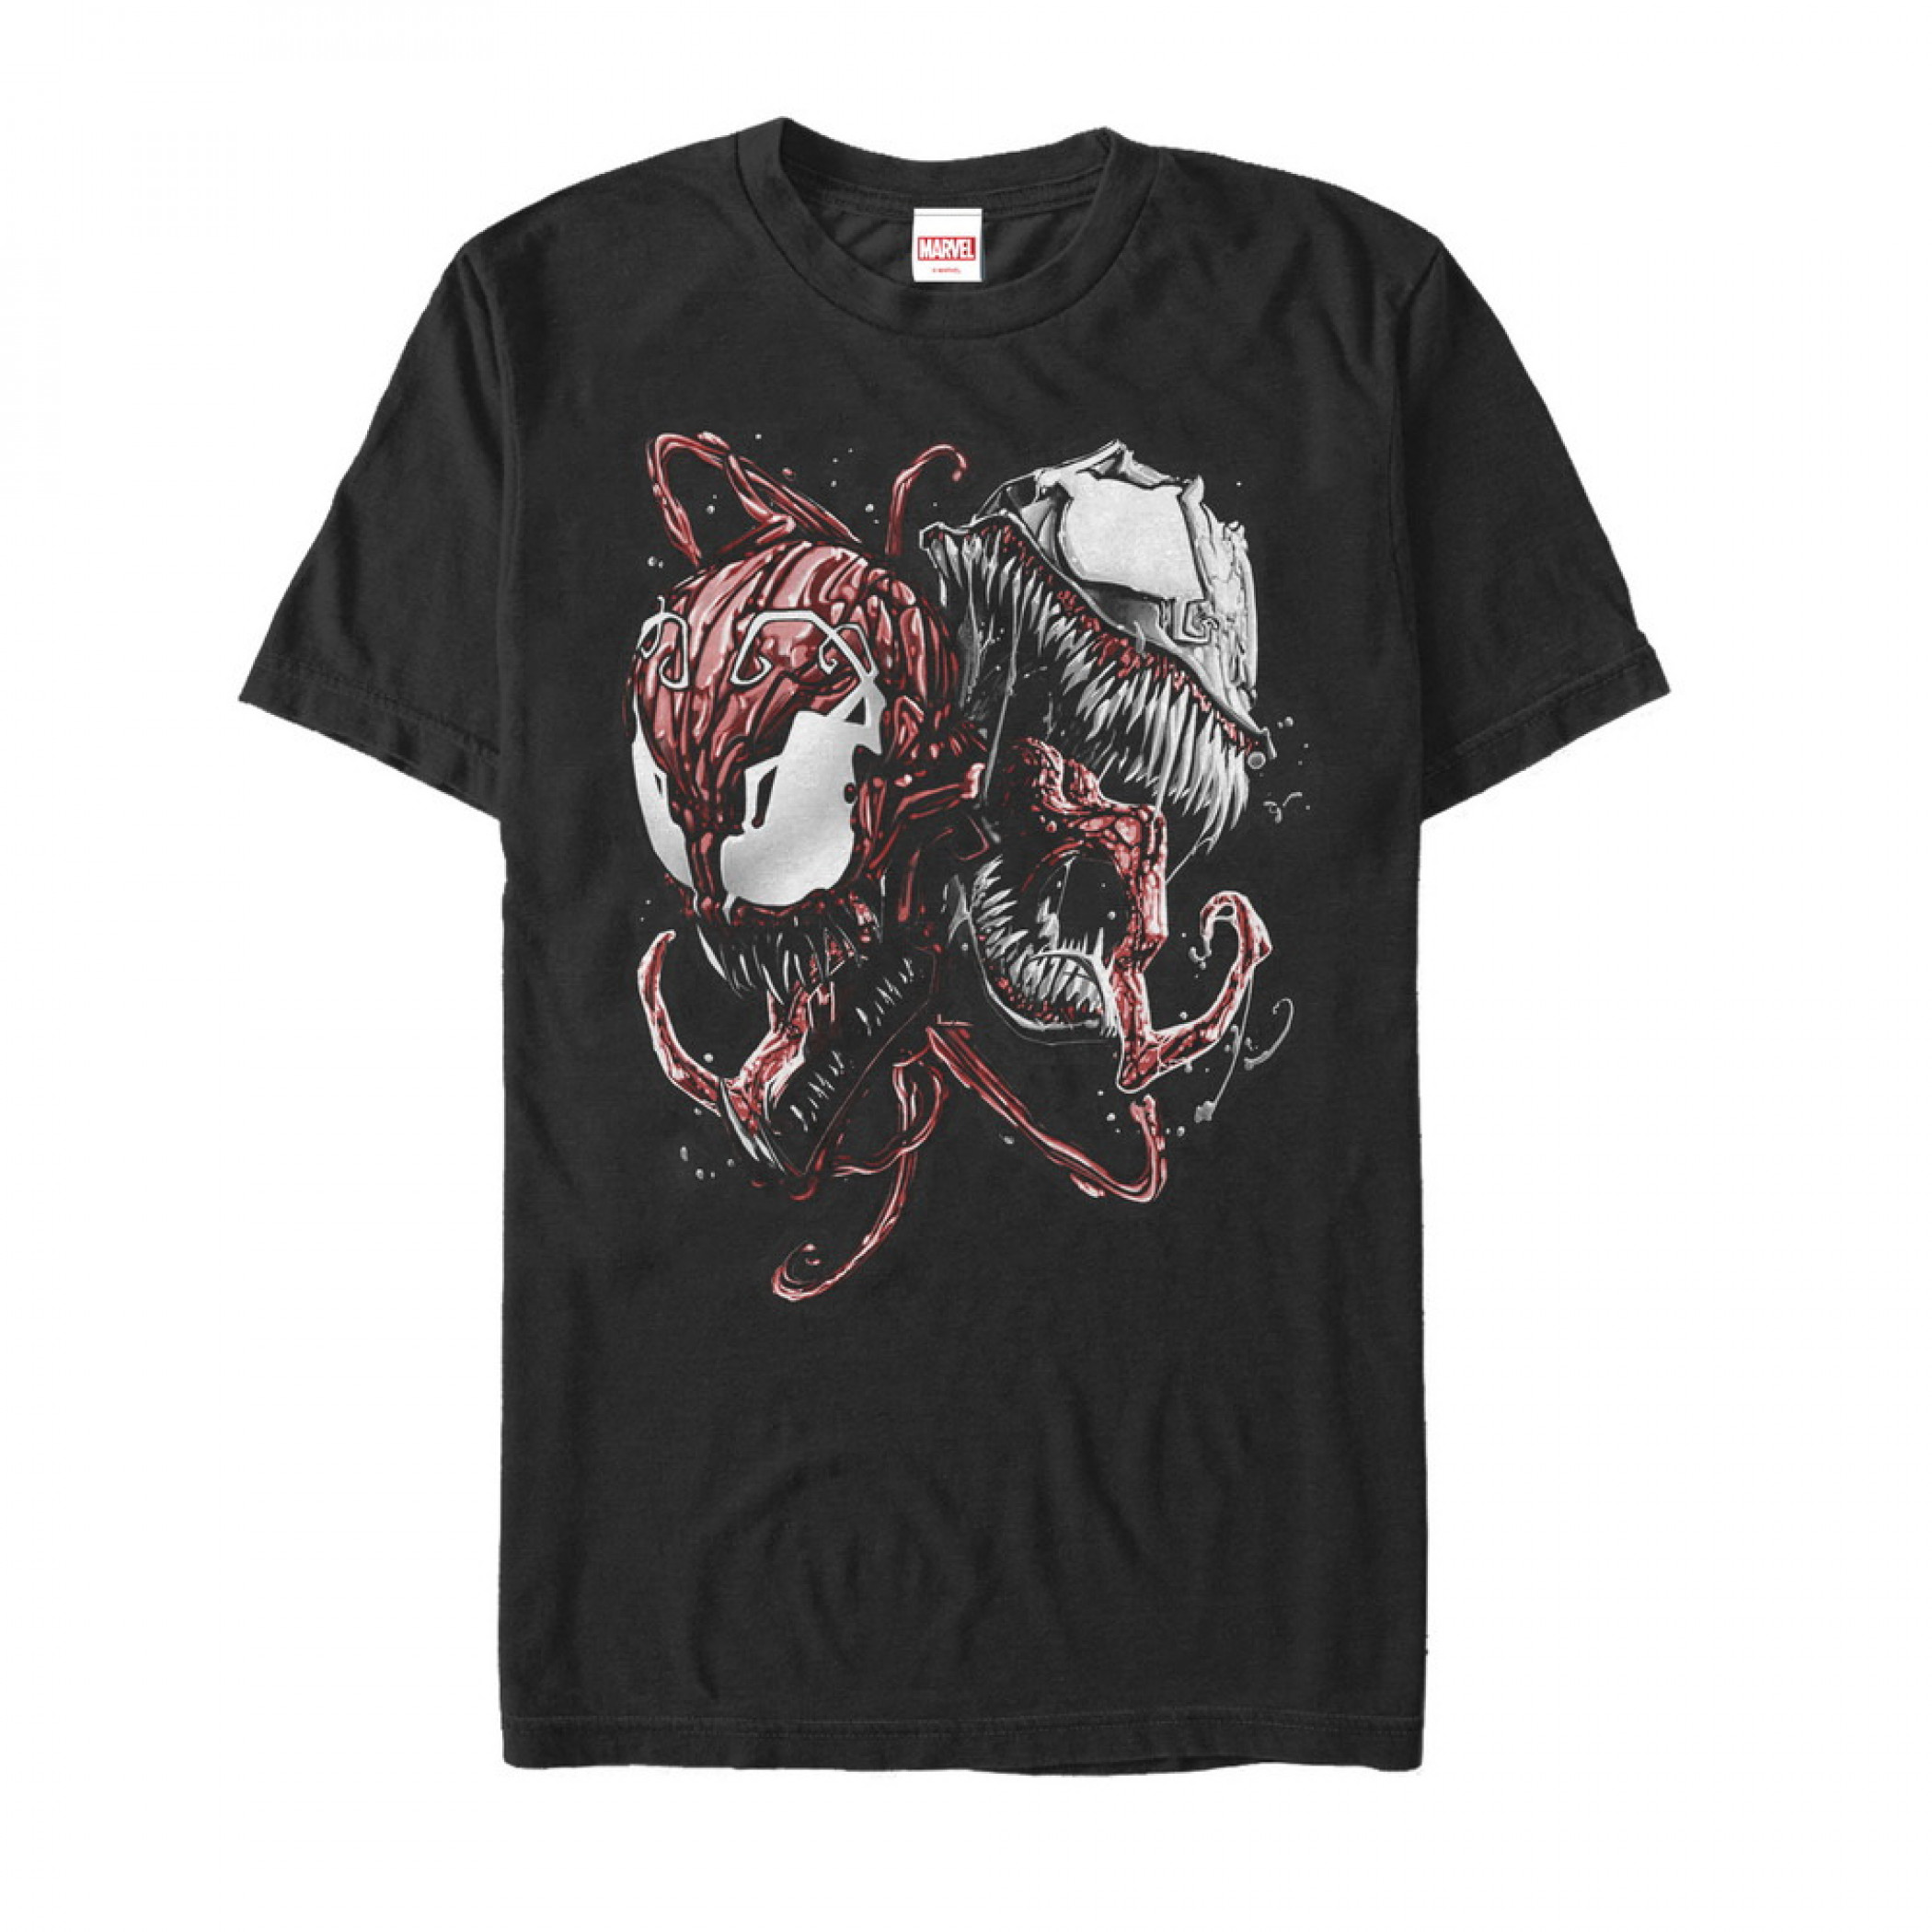 Carnage and Venom Together Forever T-Shirt